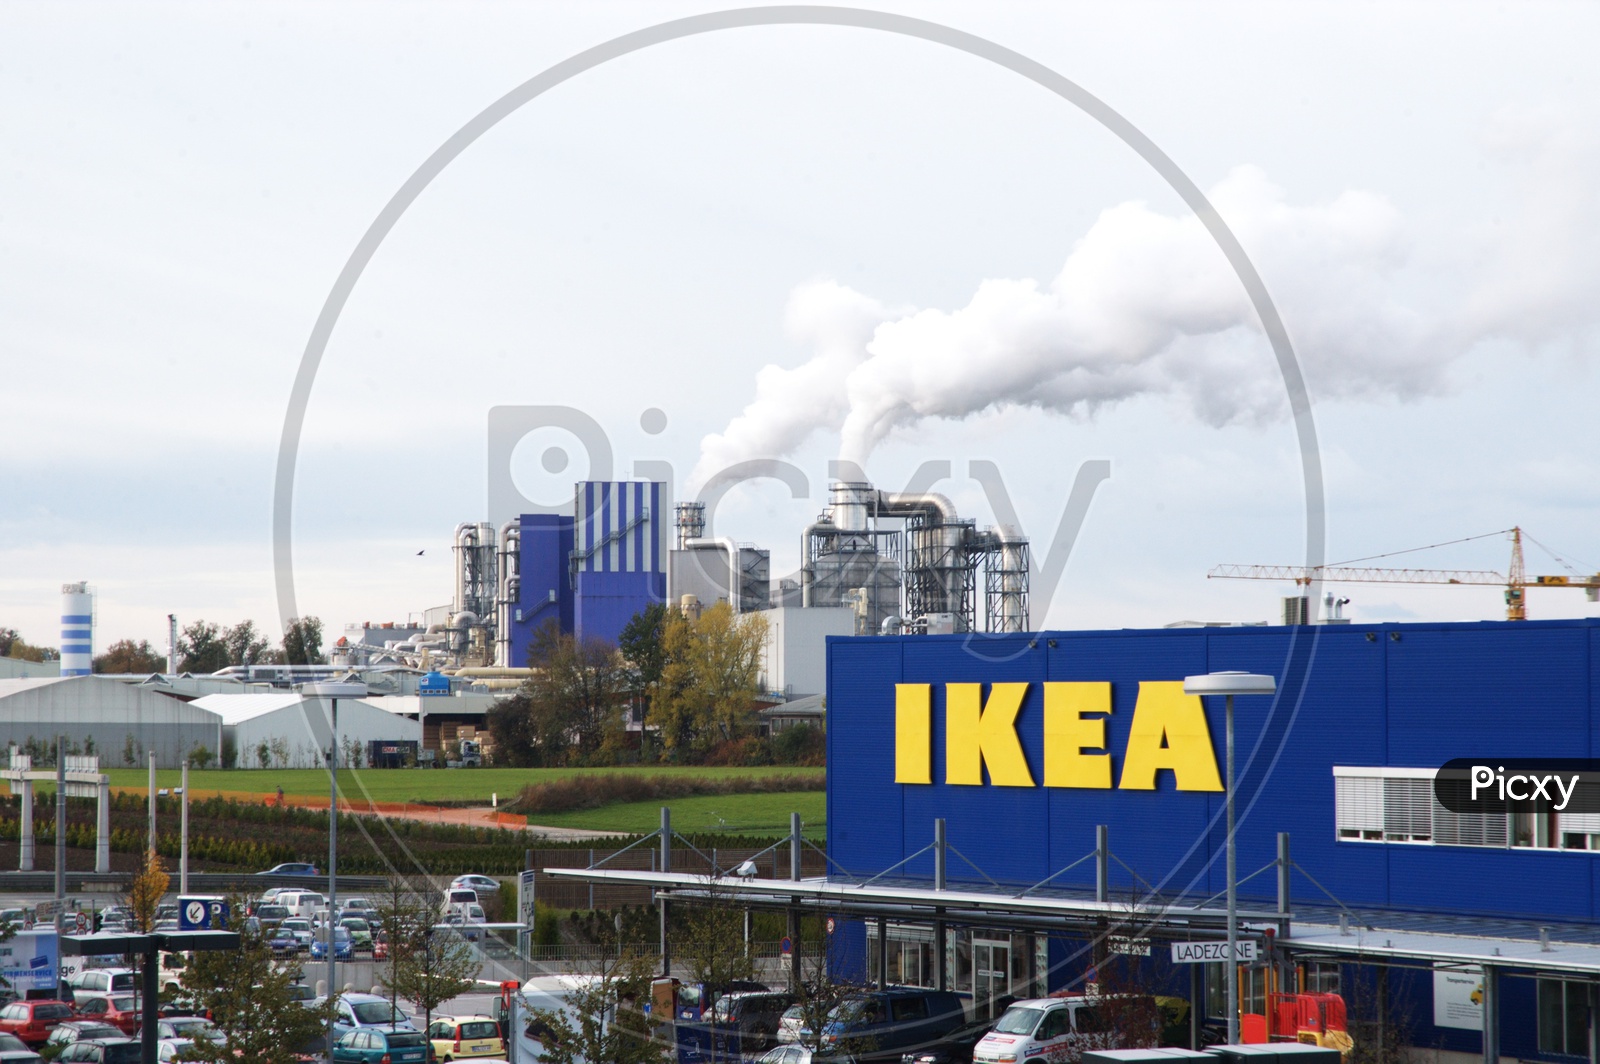 View of IKEA alongside the industry